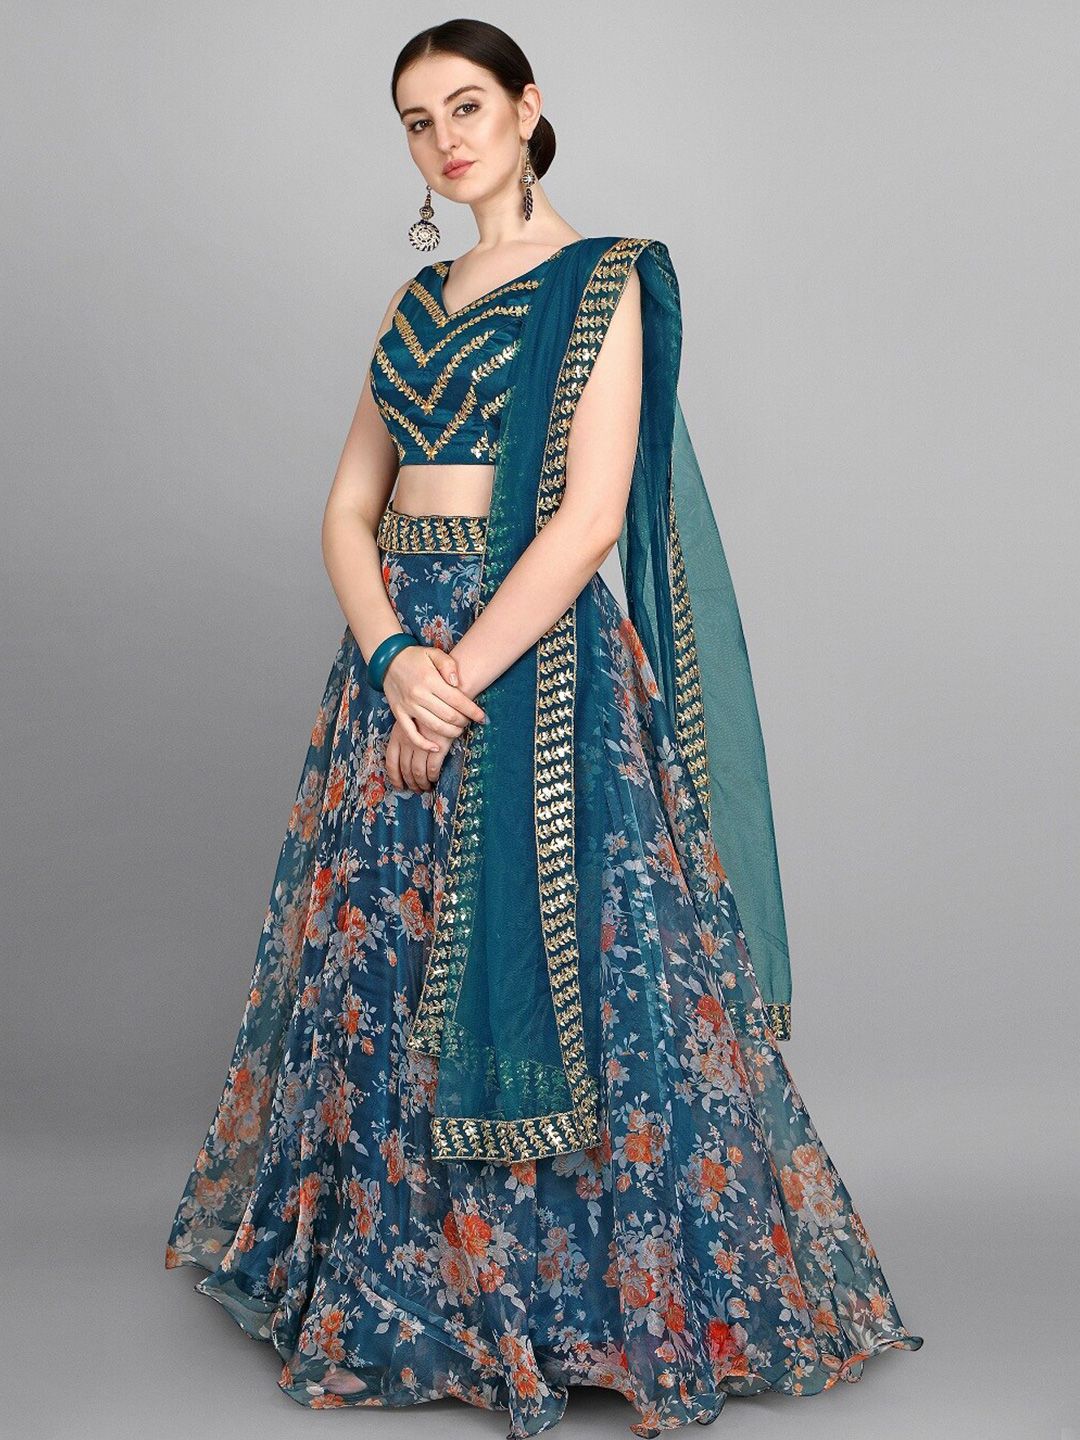 Fashionuma Turquoise Blue & Red Embellished Sequinned Semi-Stitched Lehenga & Unstitched Blouse With Dupatta Price in India